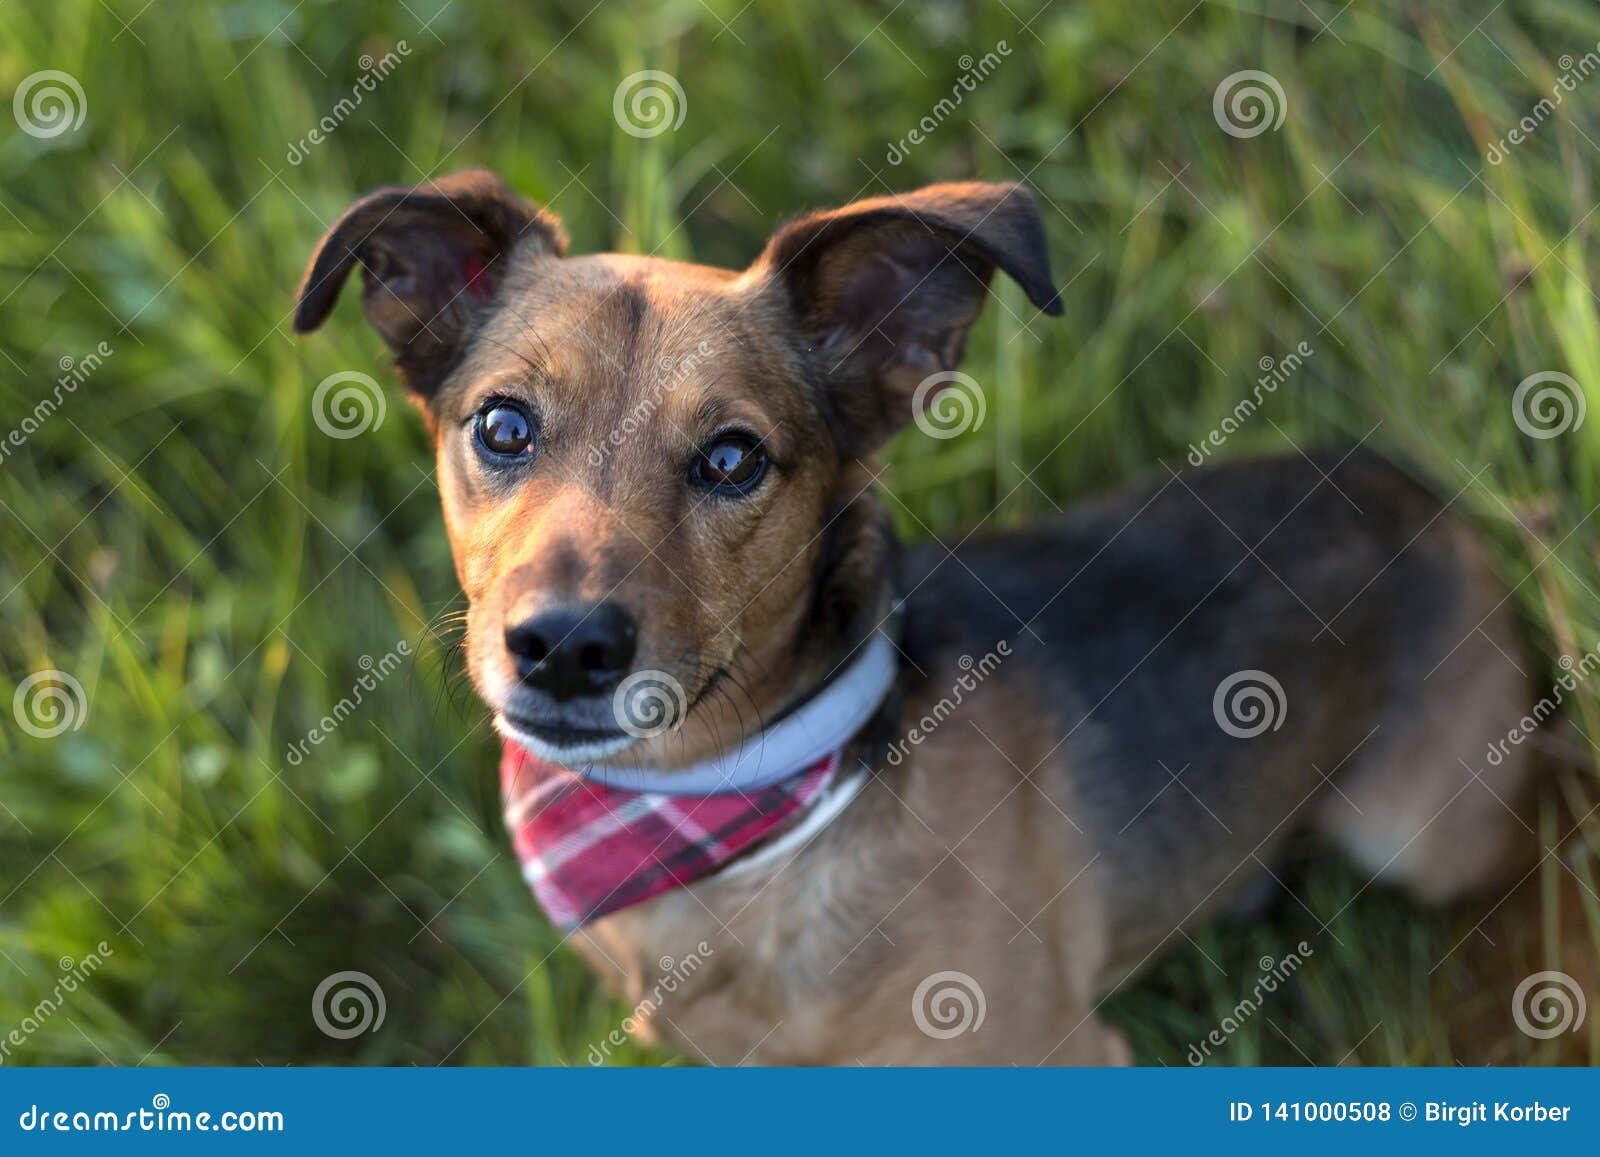 portrait of a terrier dachshund mix